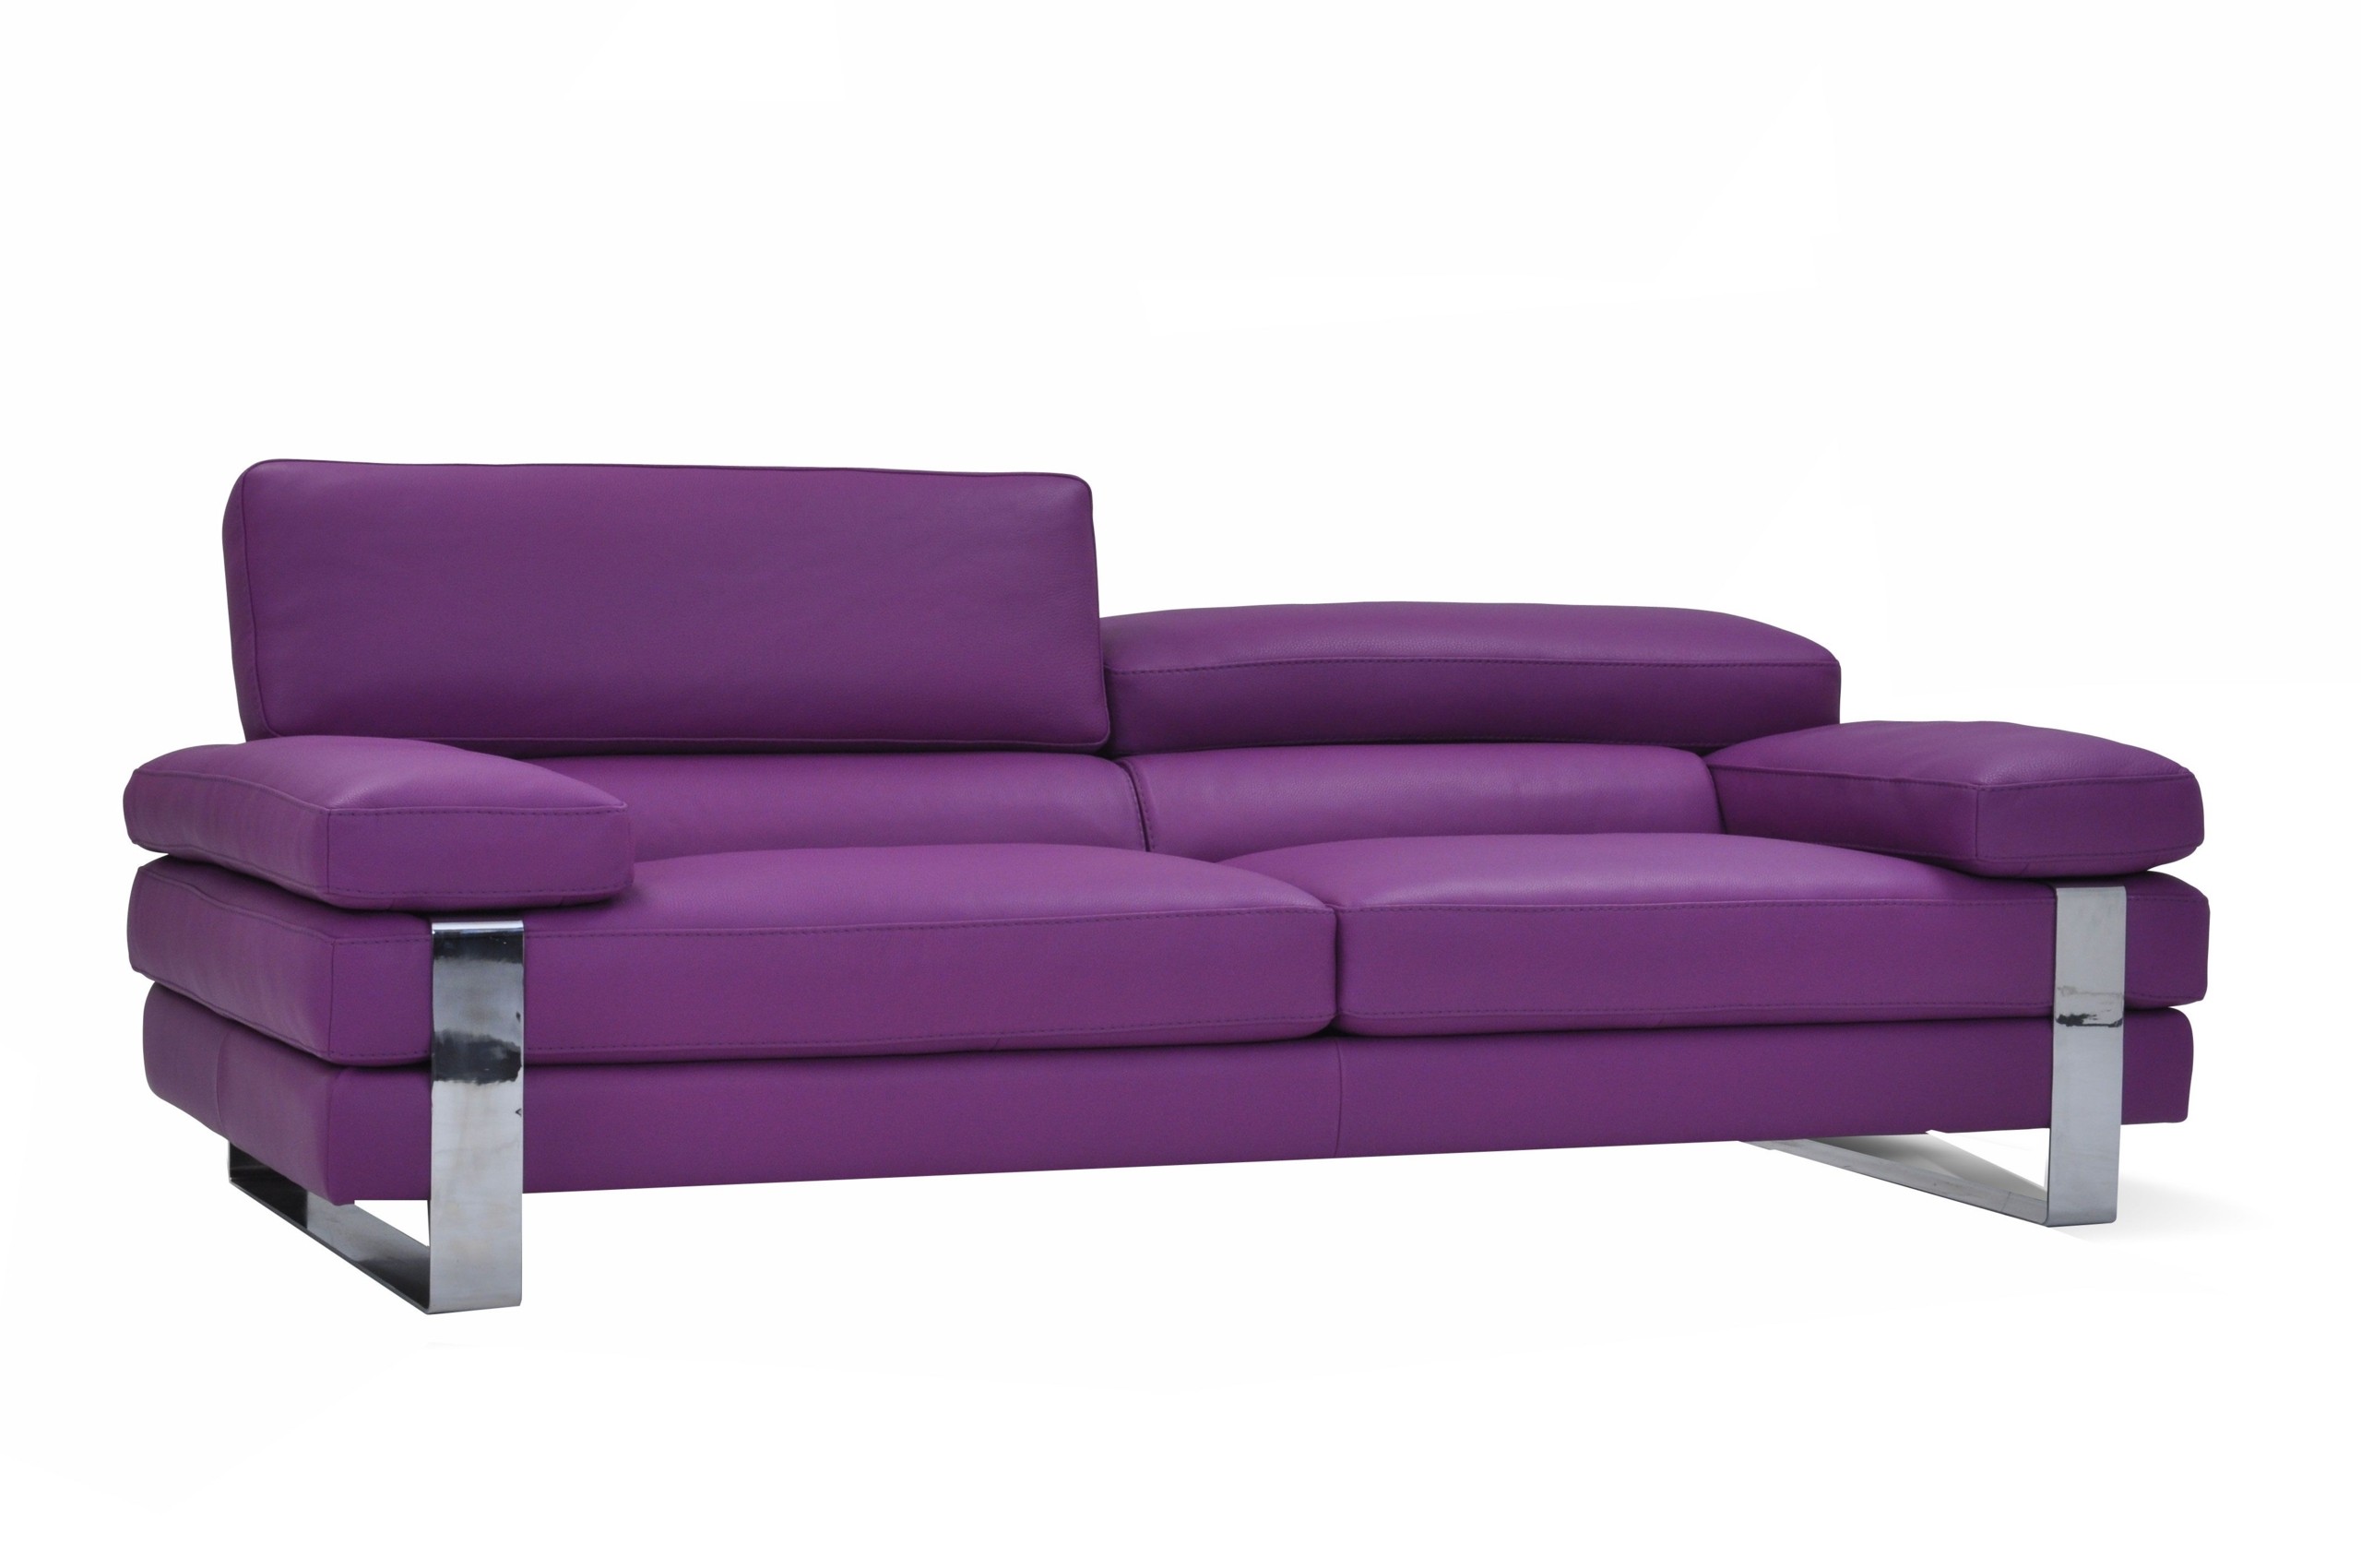 Purple leather sofa made in italy furniture toronto